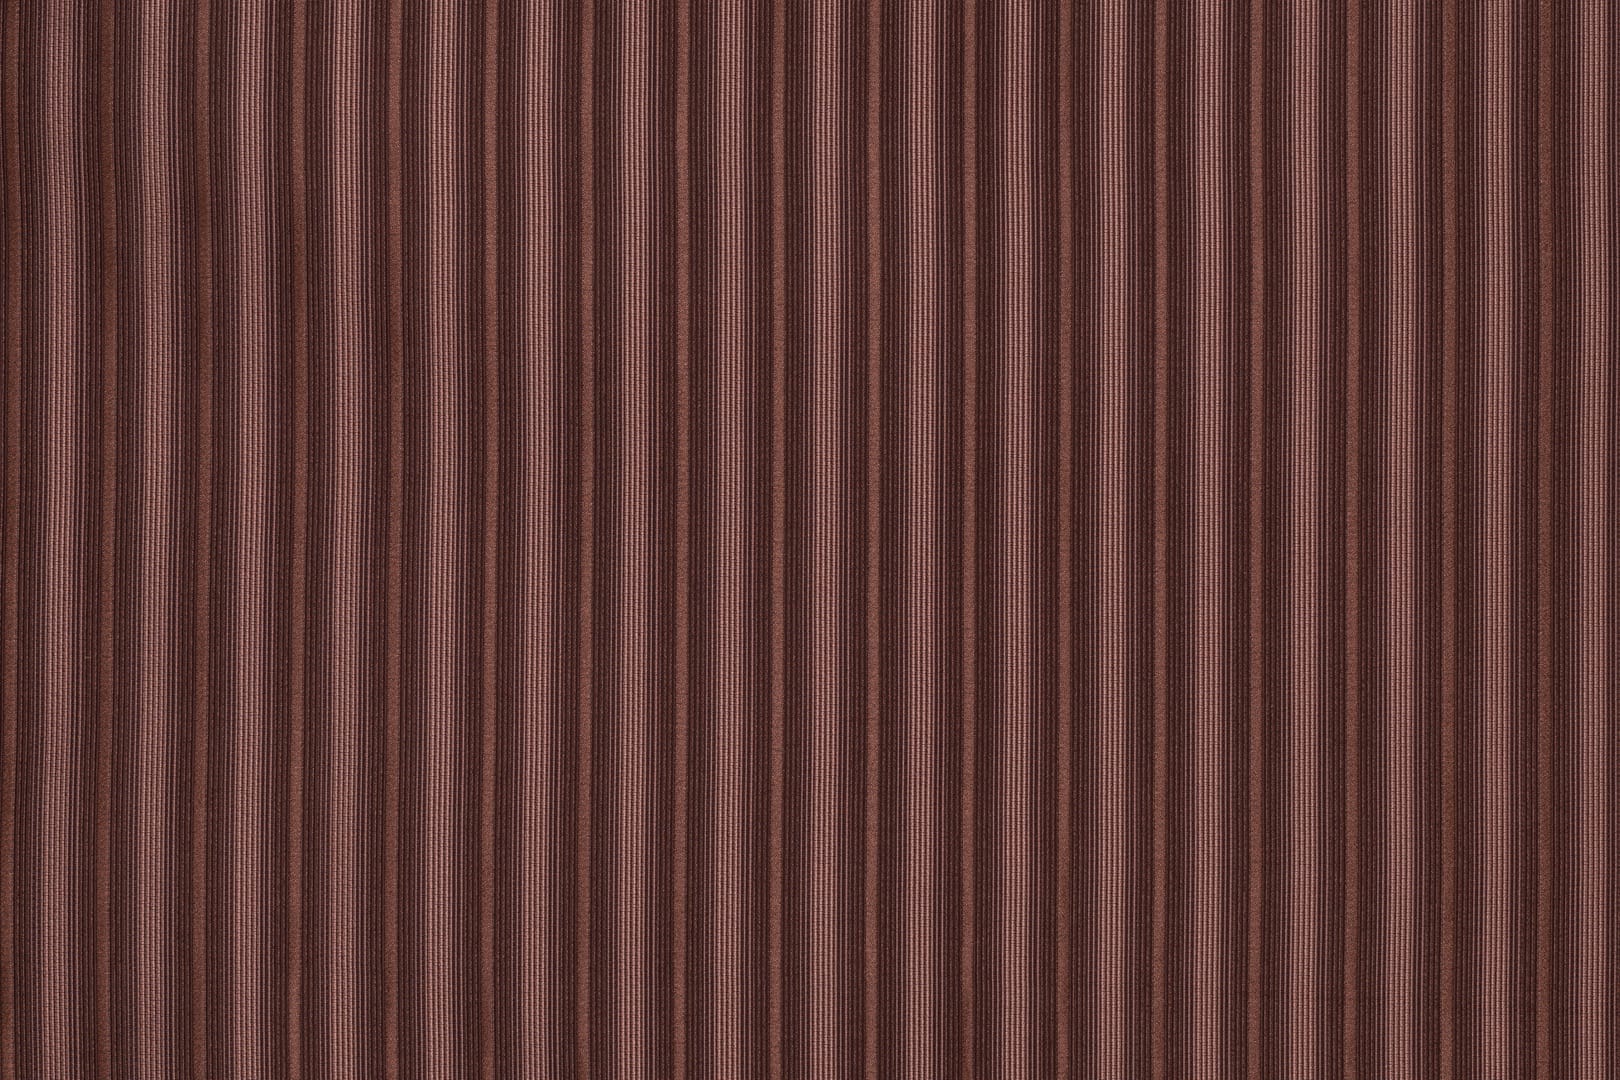 JB014 SHADE 009 Cacao home decoration fabric